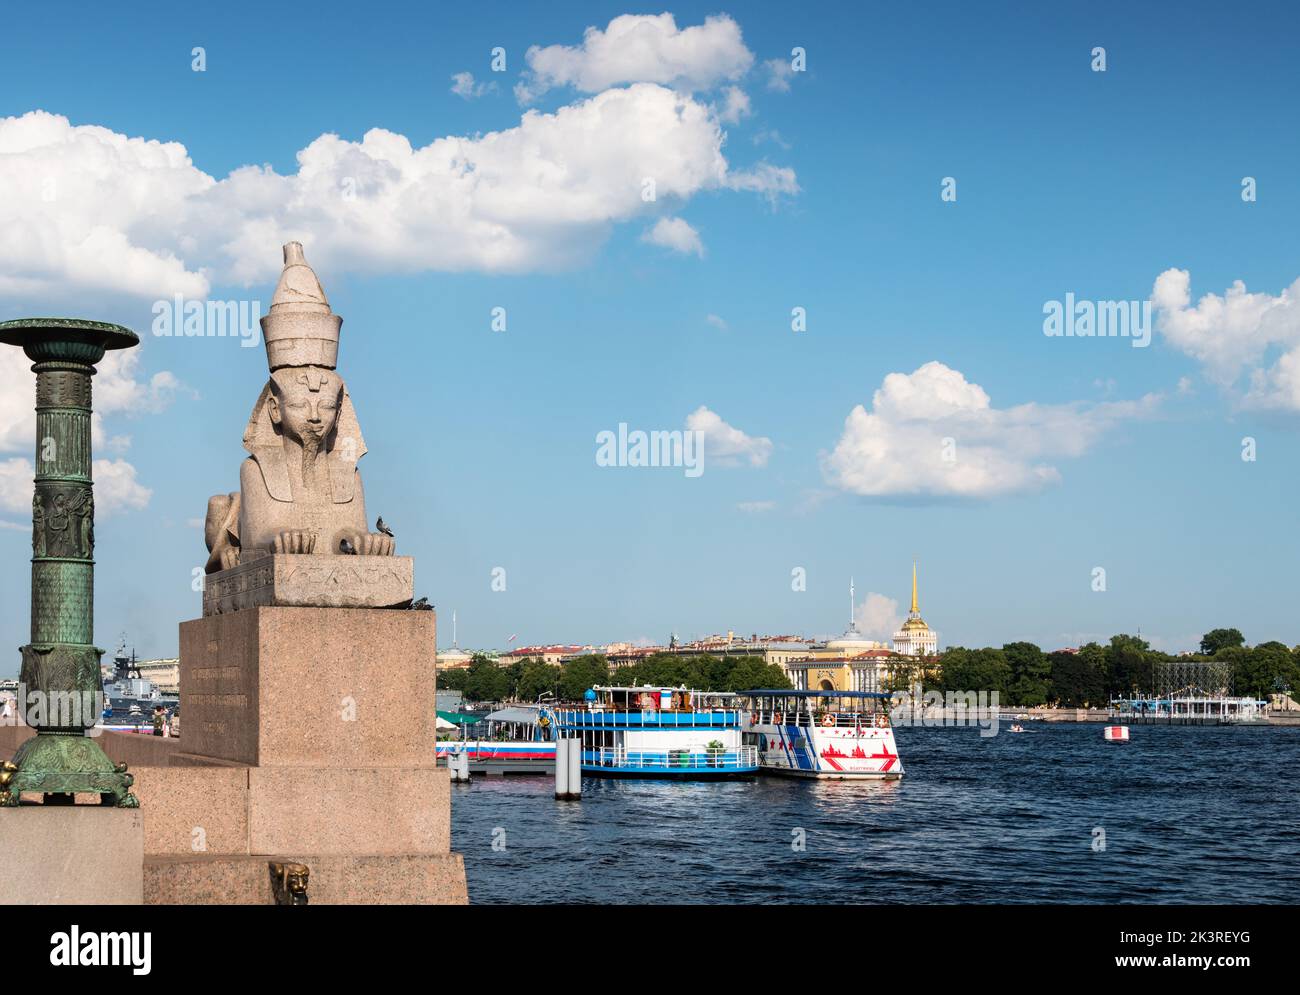 Ägyptische Sphinx am Universitätsufer, Sankt Petersburg, Russland Stockfoto